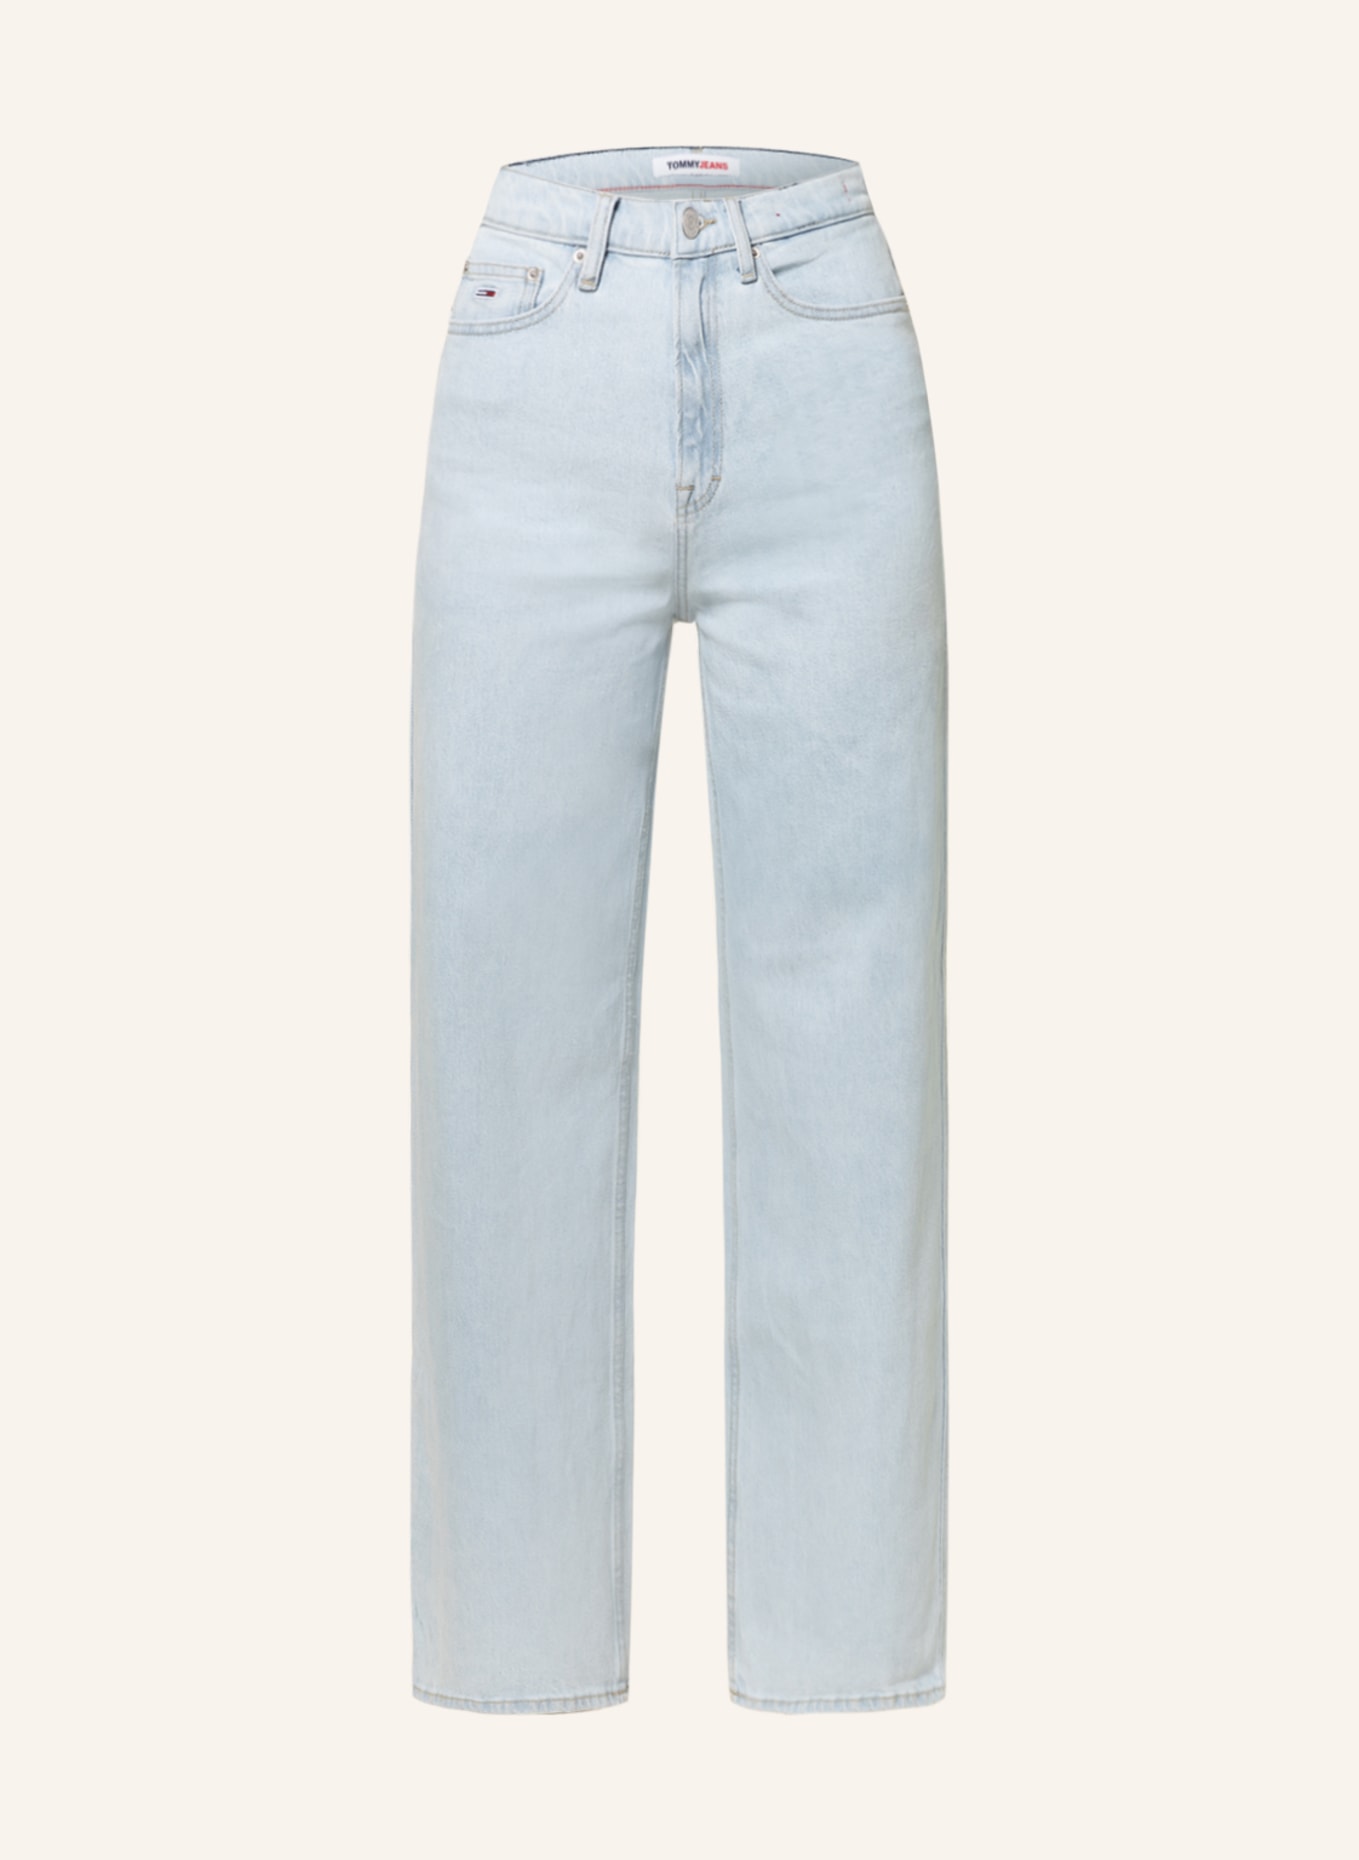 TOMMY JEANS Jeans CLAIRE, Farbe: 1AB Denim Light (Bild 1)